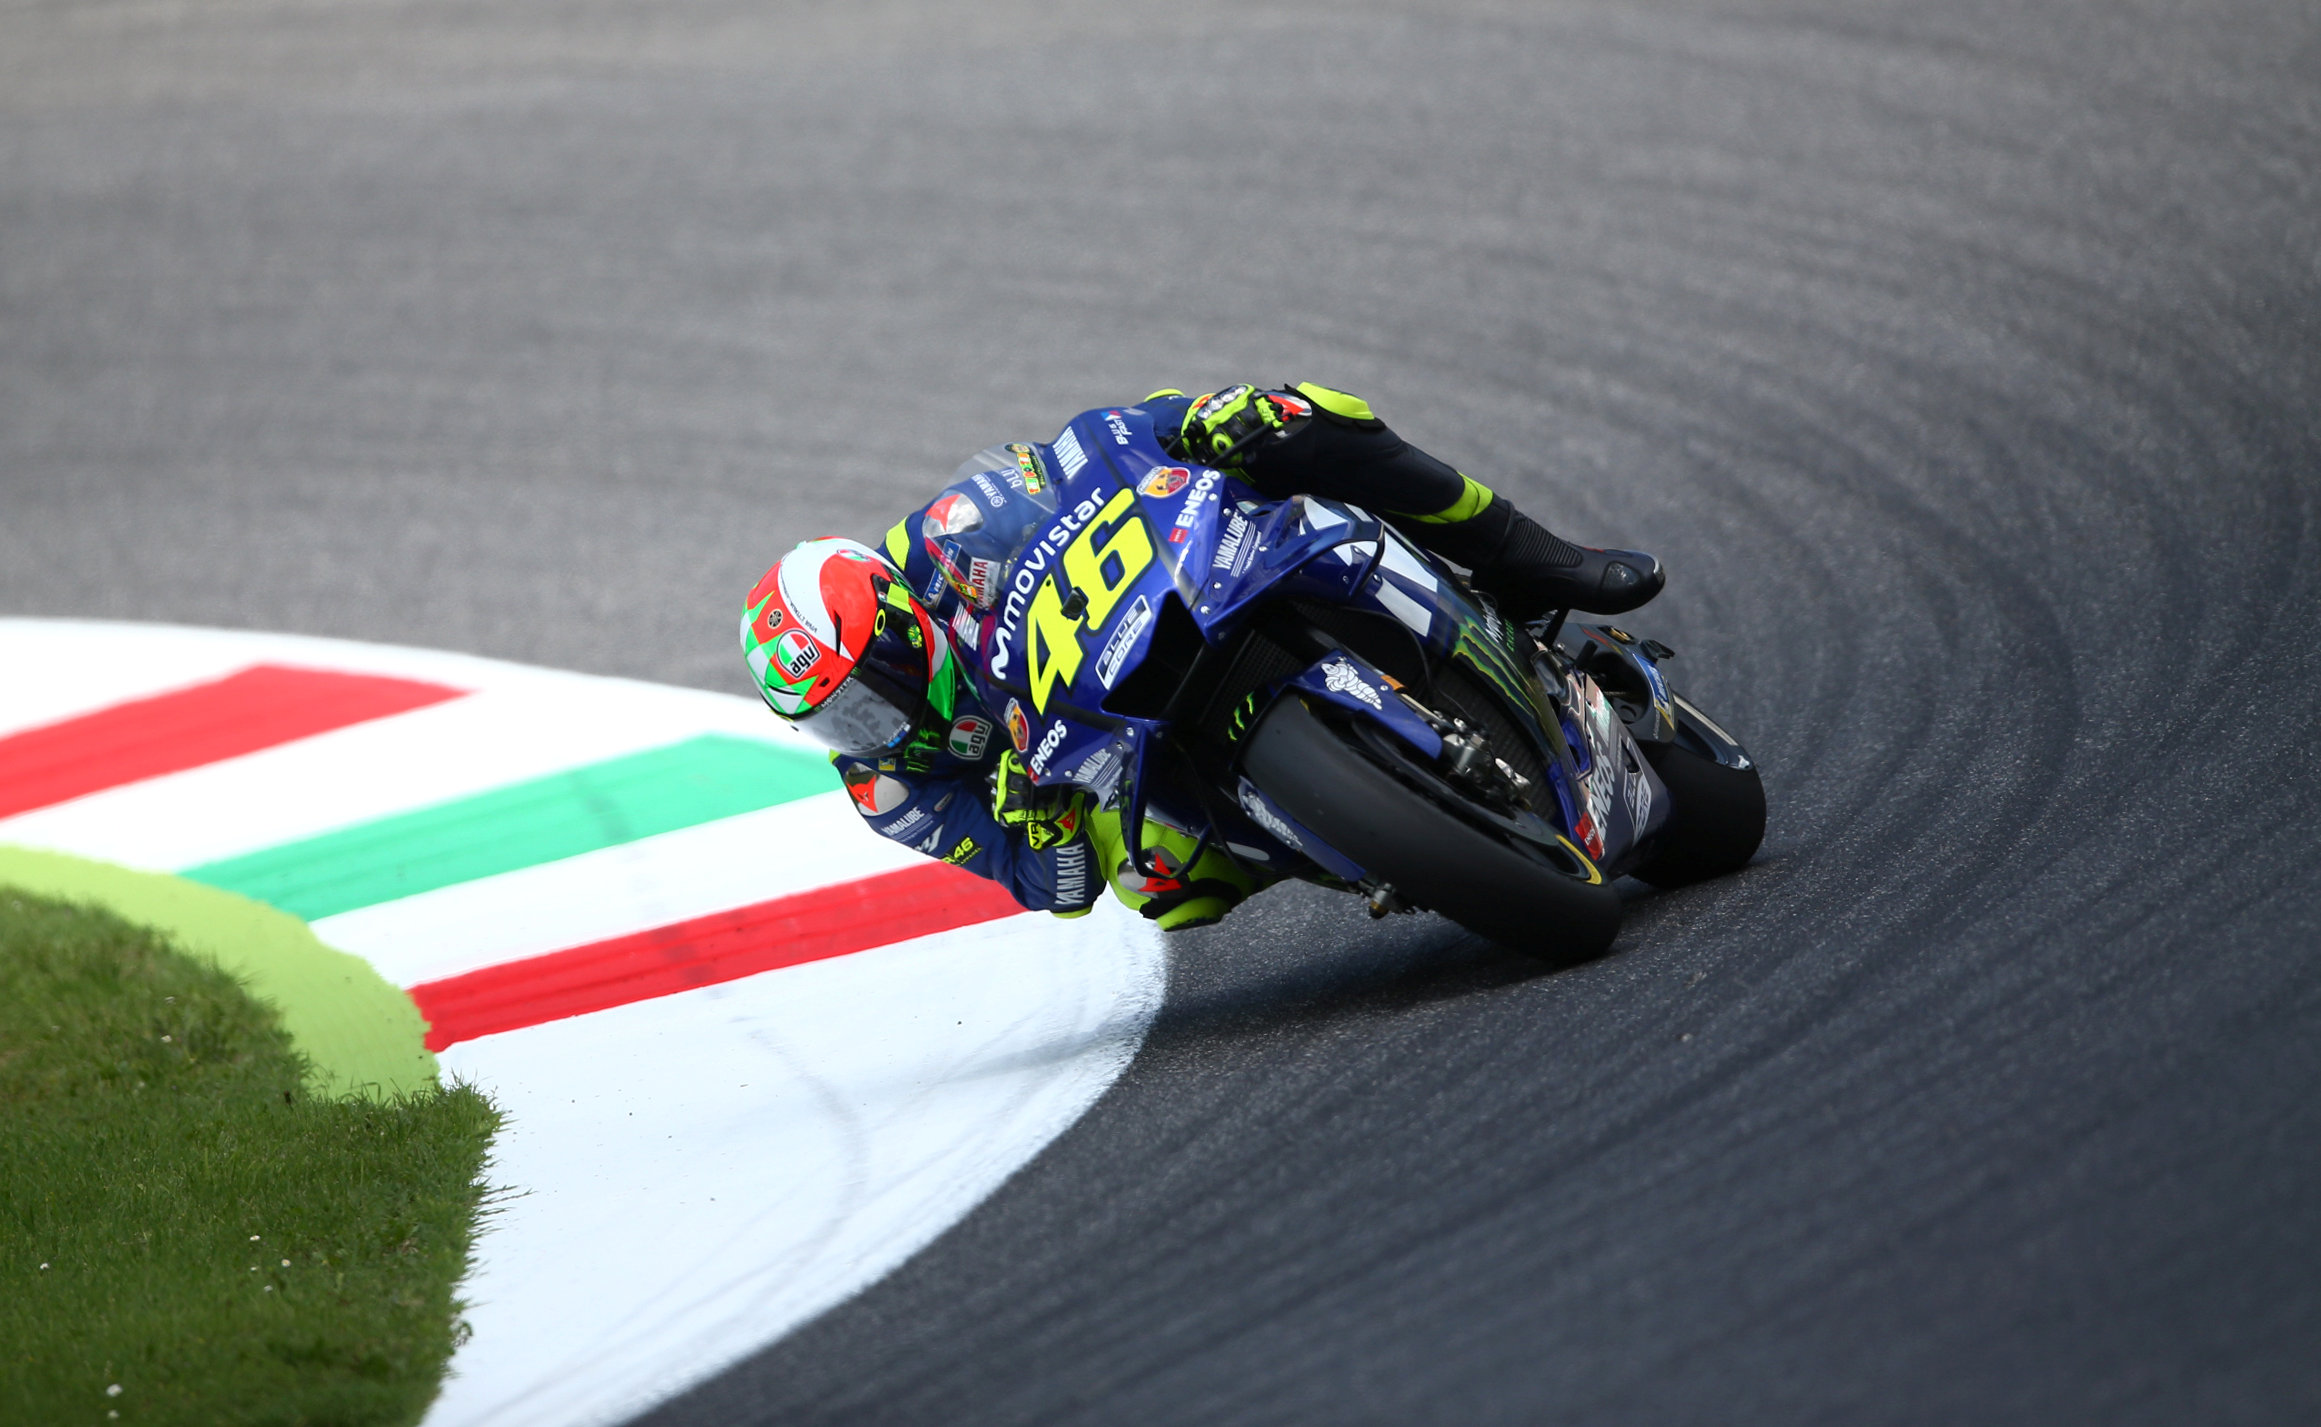 Motorsport: Rossi on pole for home Italian Grand Prix